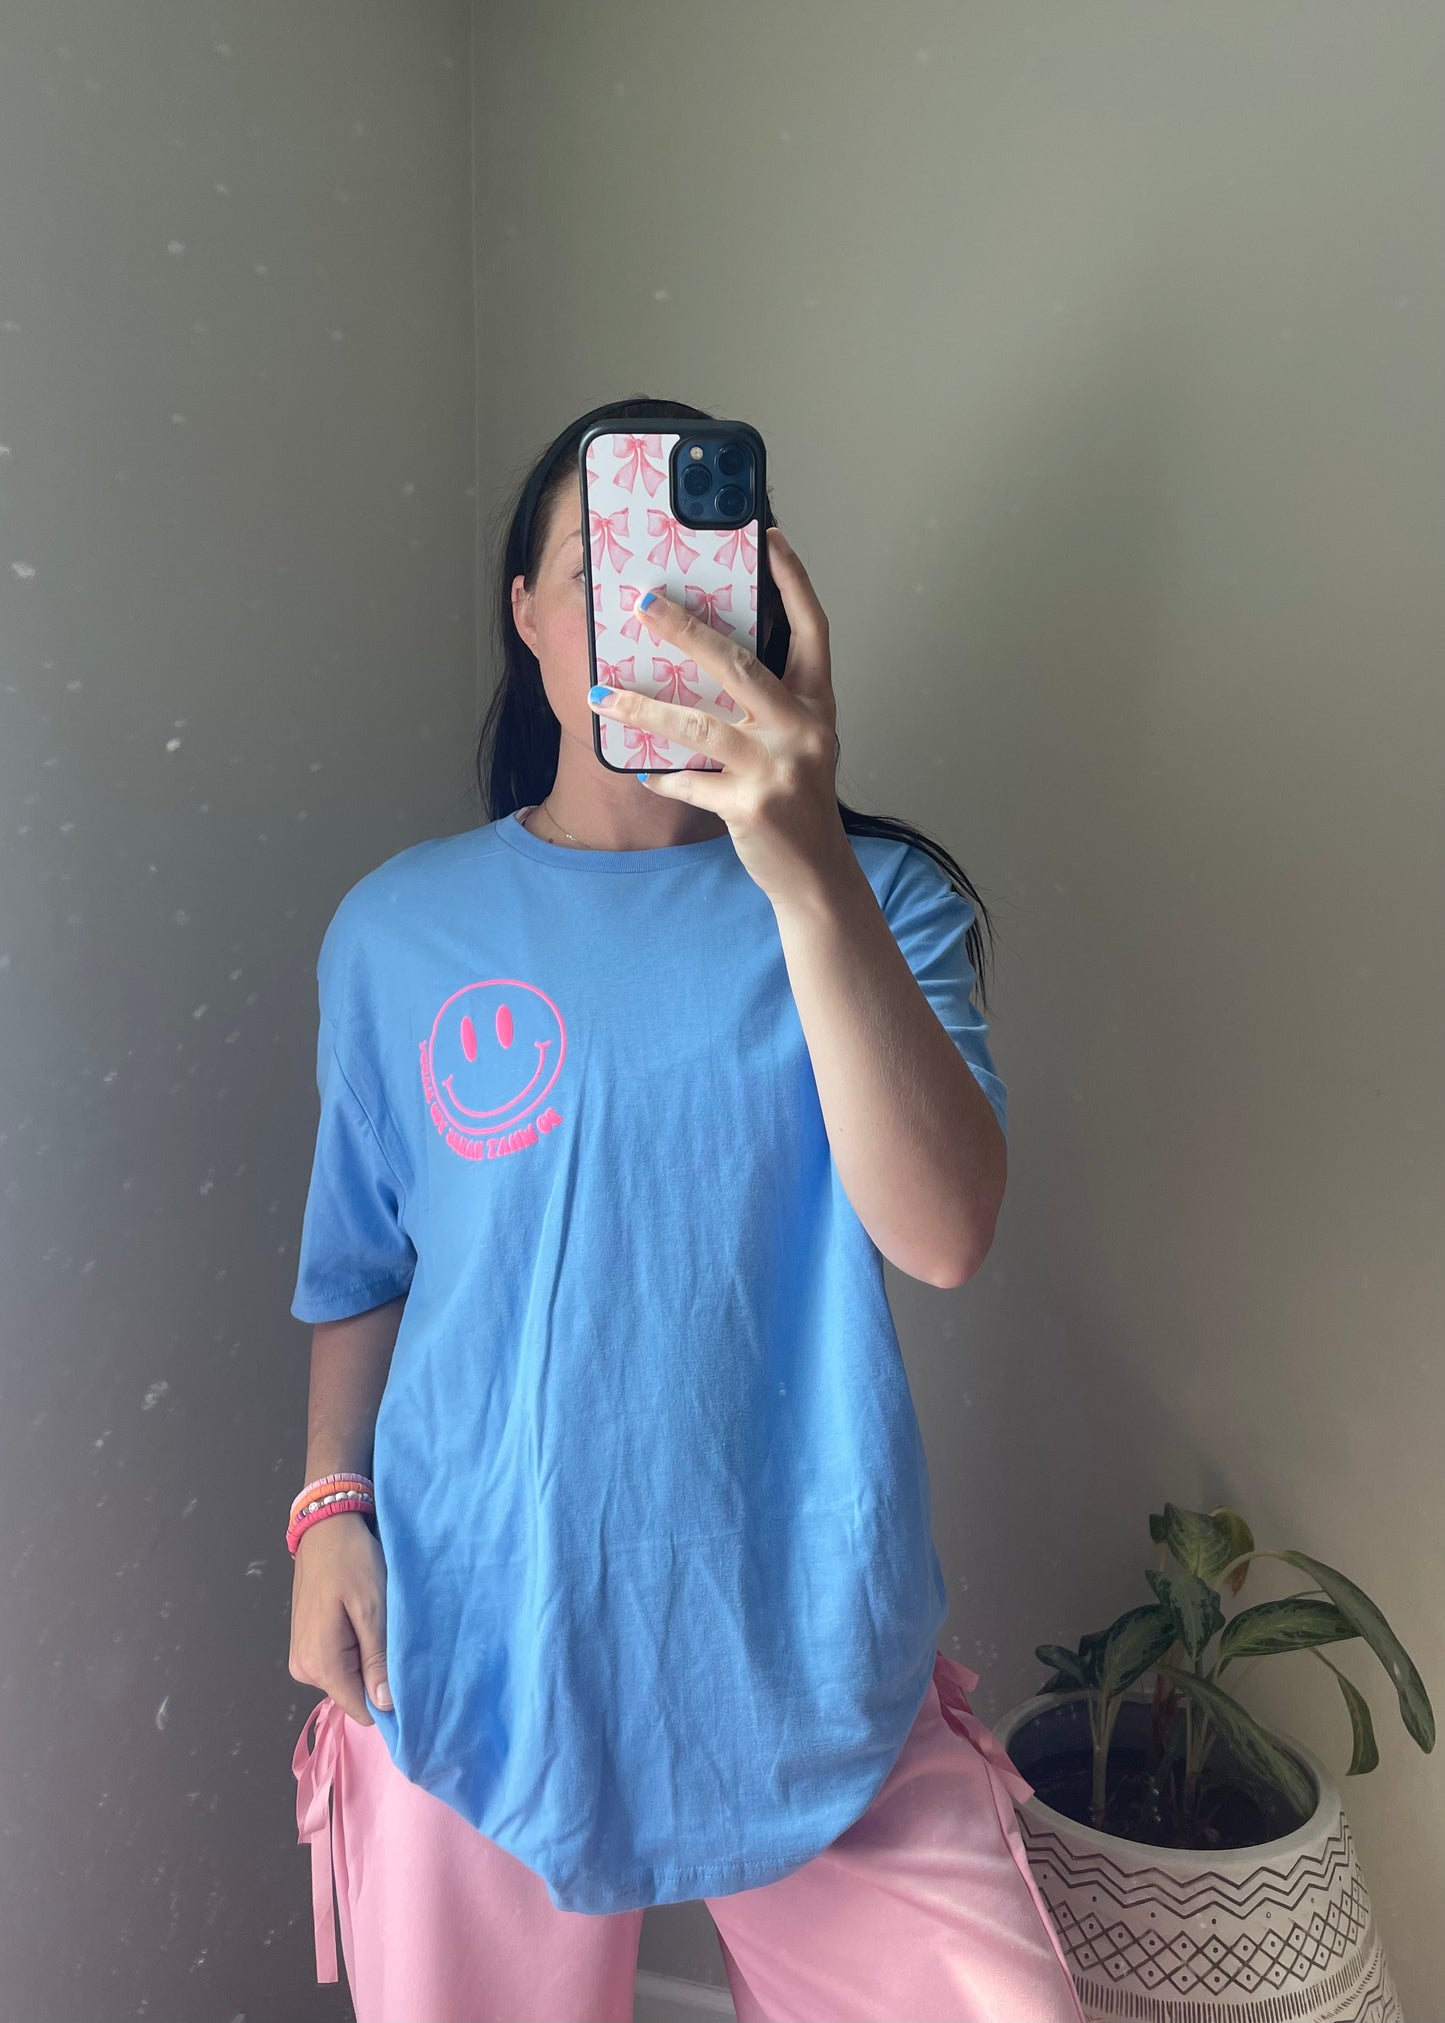 carolina blue+pink do what makes you happy t-shirt